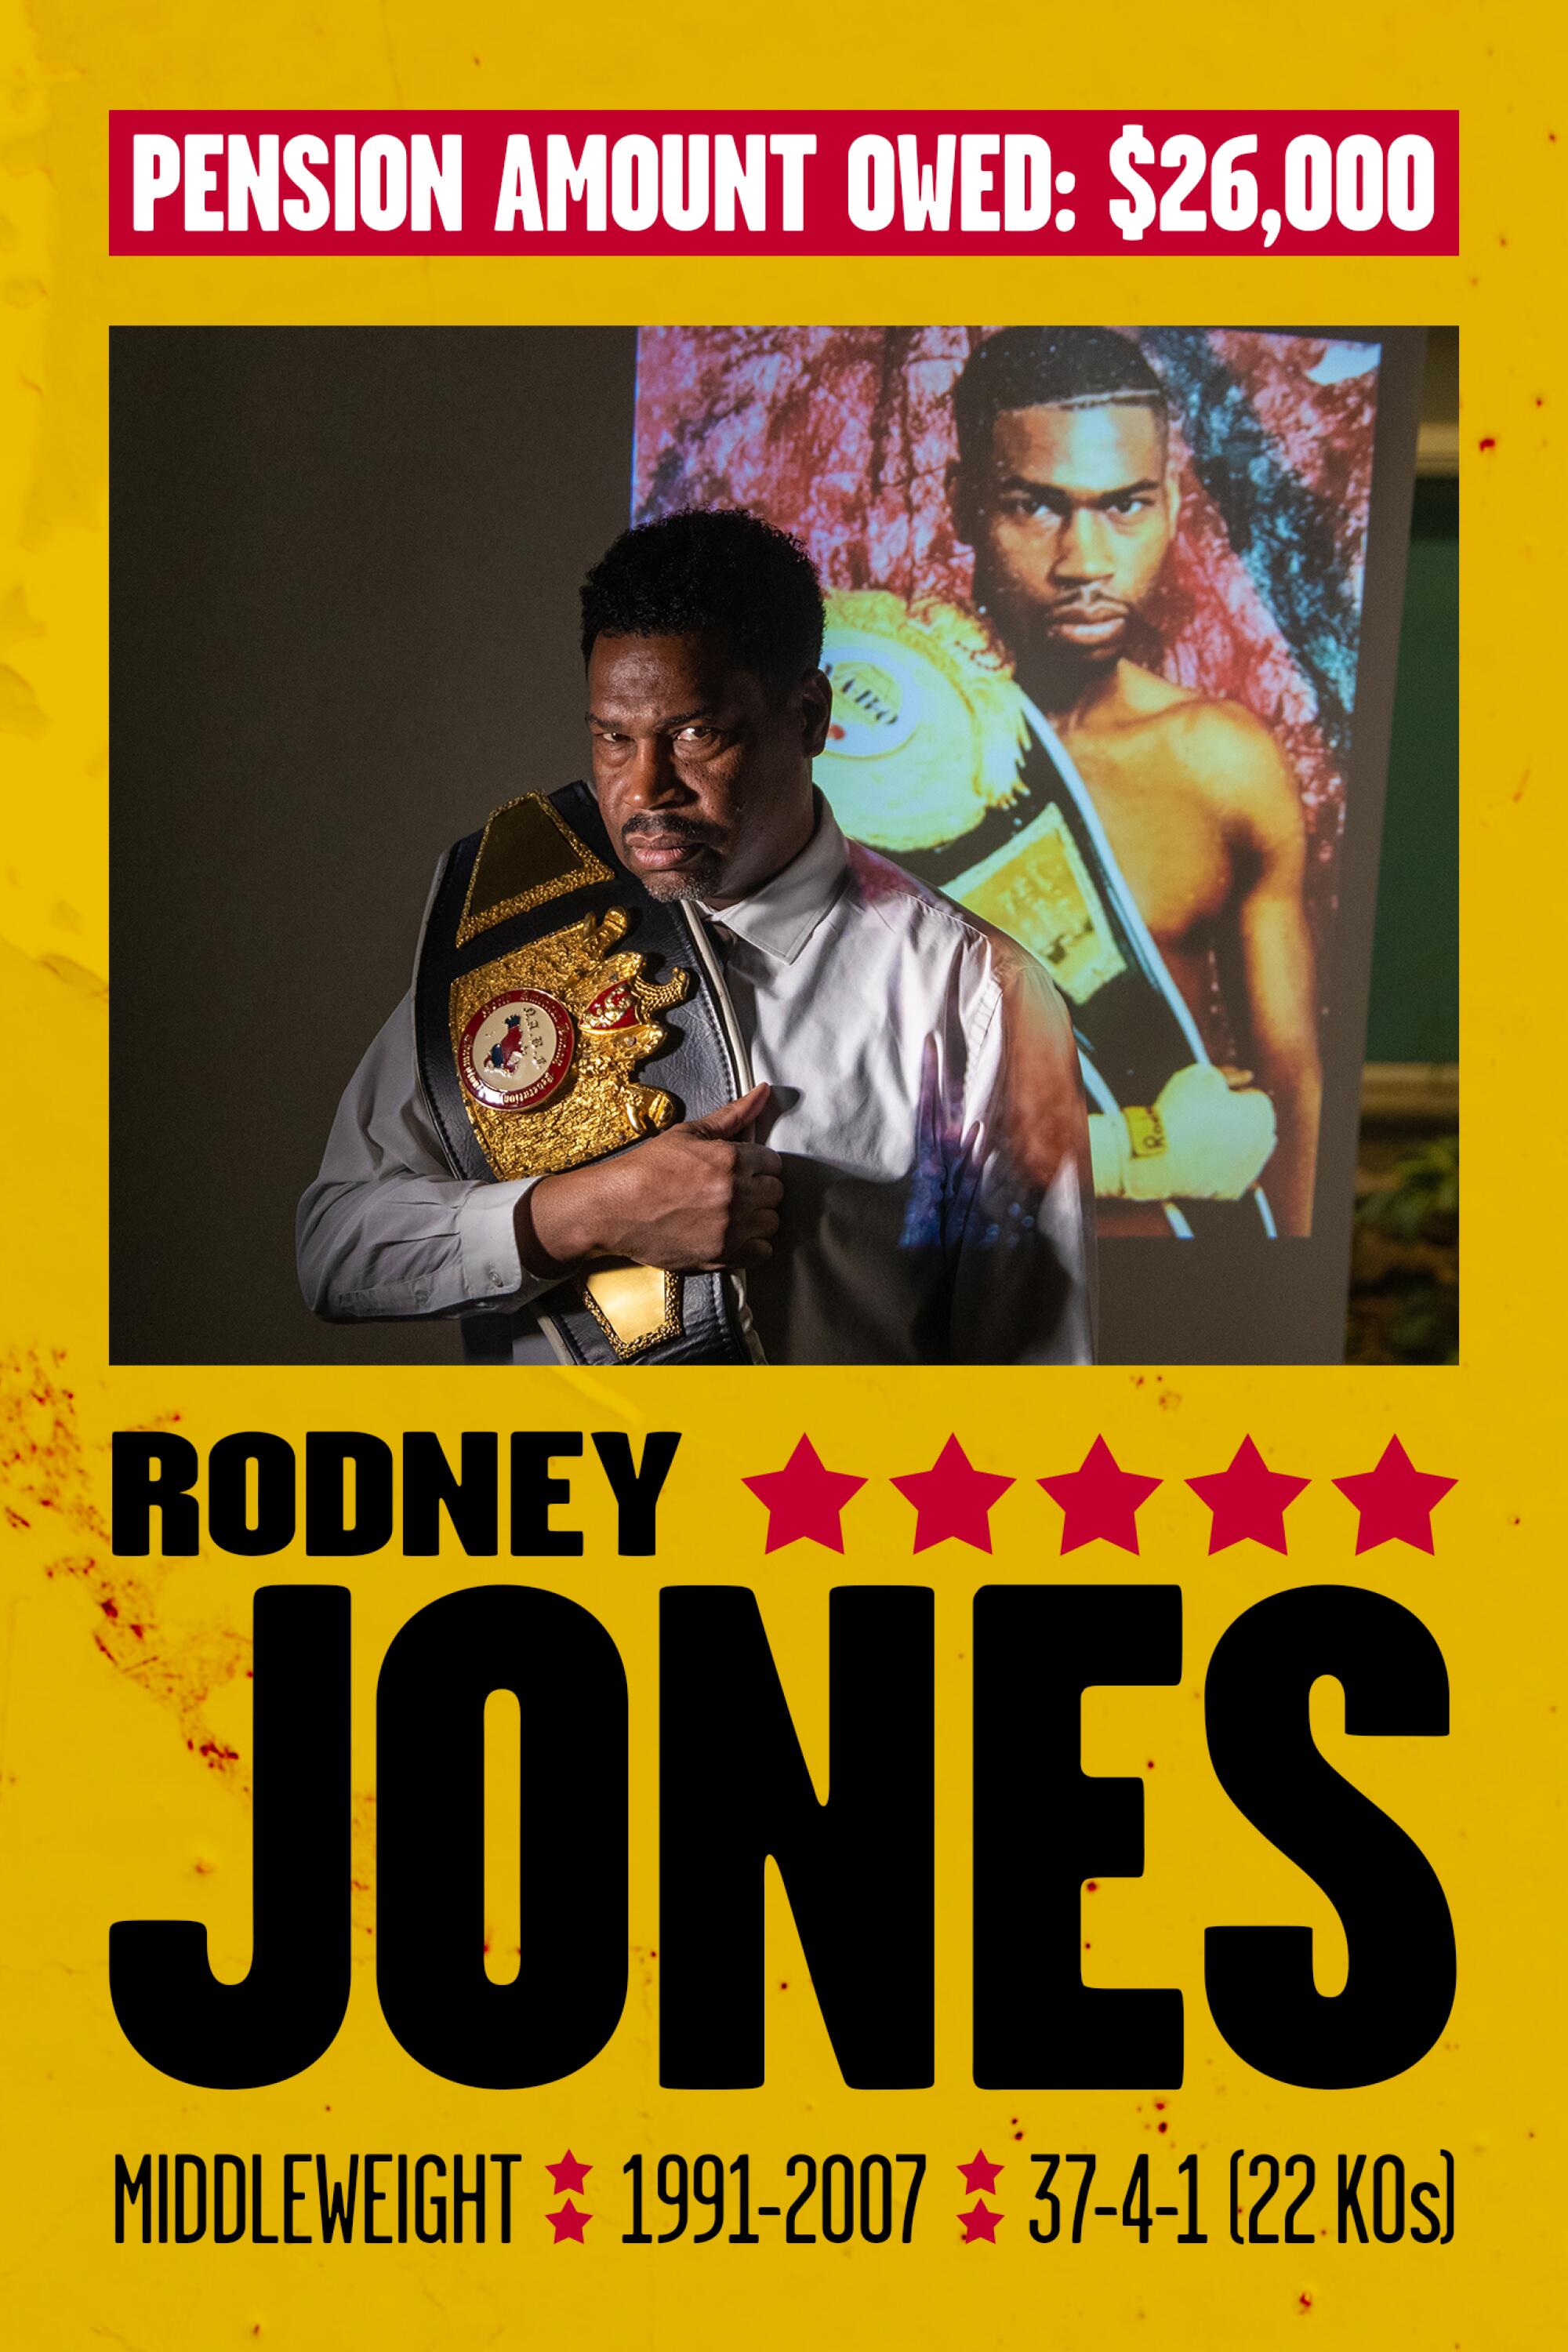 Fight poster: RODNEY JONES, MIDDLEWEIGHT, 1991-2007, 37-4-1 (22 KOs), PENSION OWED: $26,000